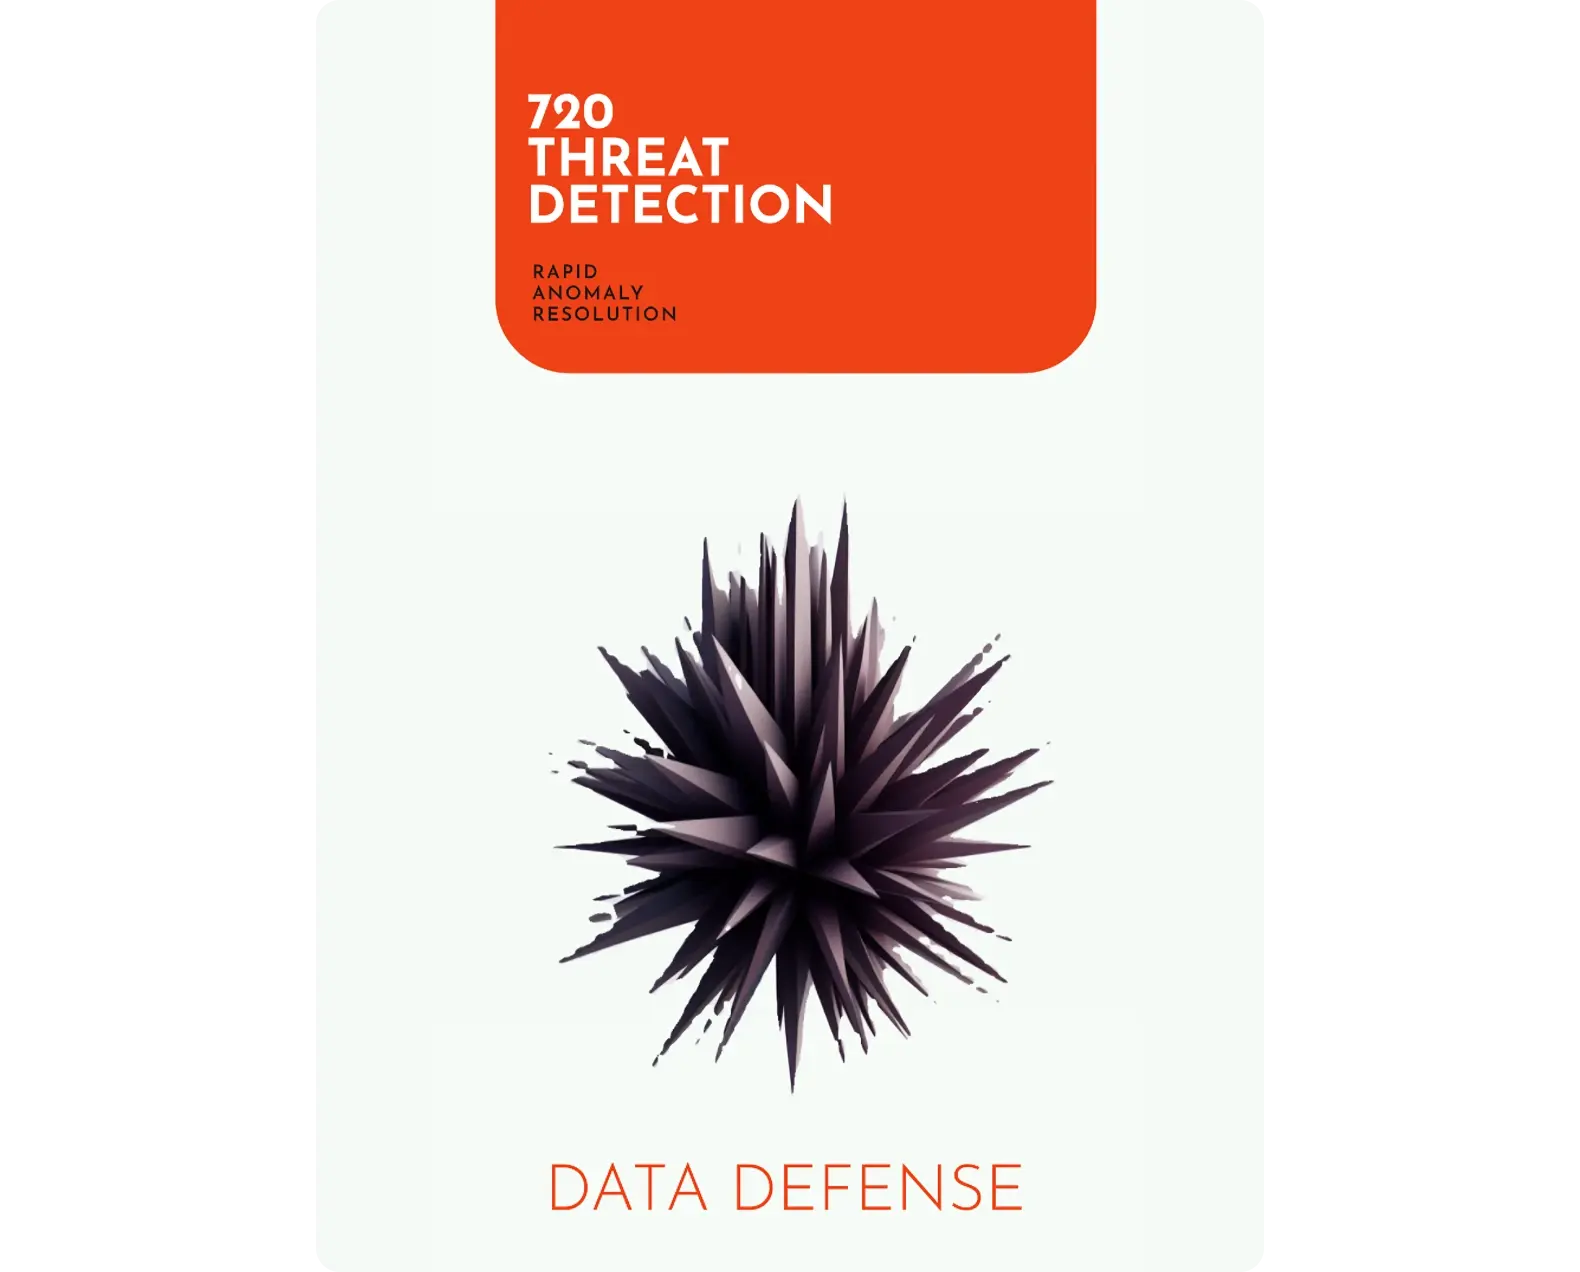 a spikey data defense image banner